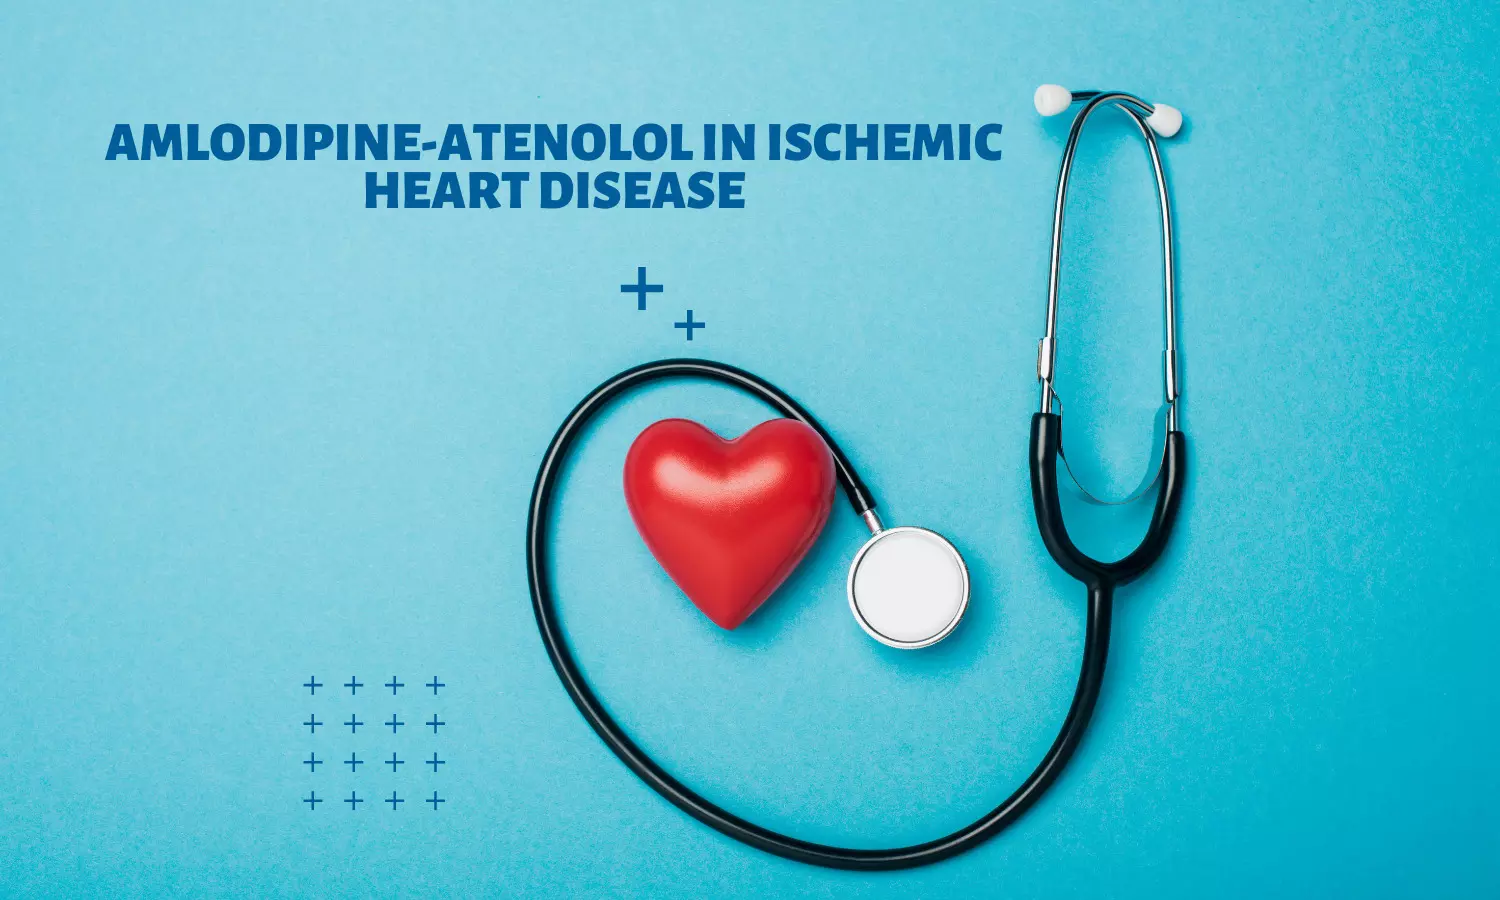 Understanding ischemic heart disease and scope for amlodipine-atenolol combination.